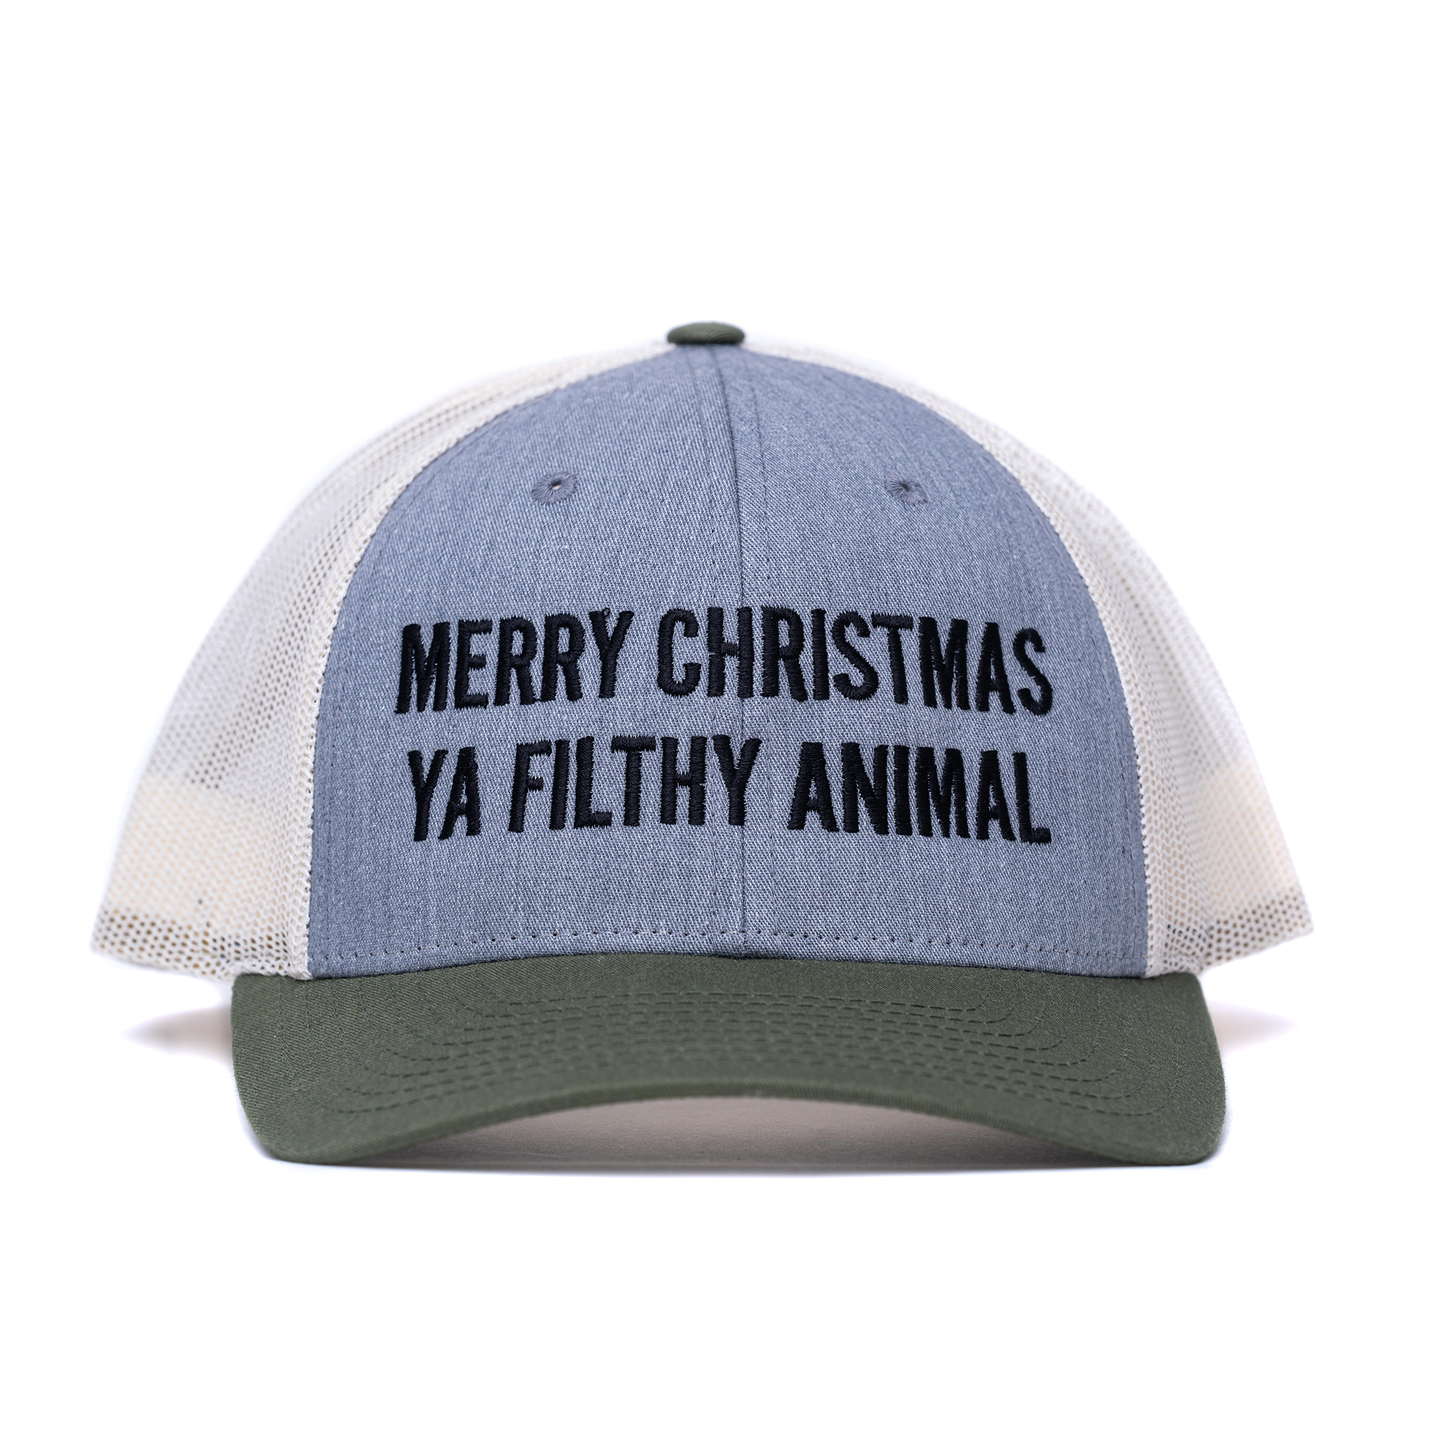 Merry Christmas Ya Filthy Animal (Black) - Trucker Hat (Birch/Gray/Army)